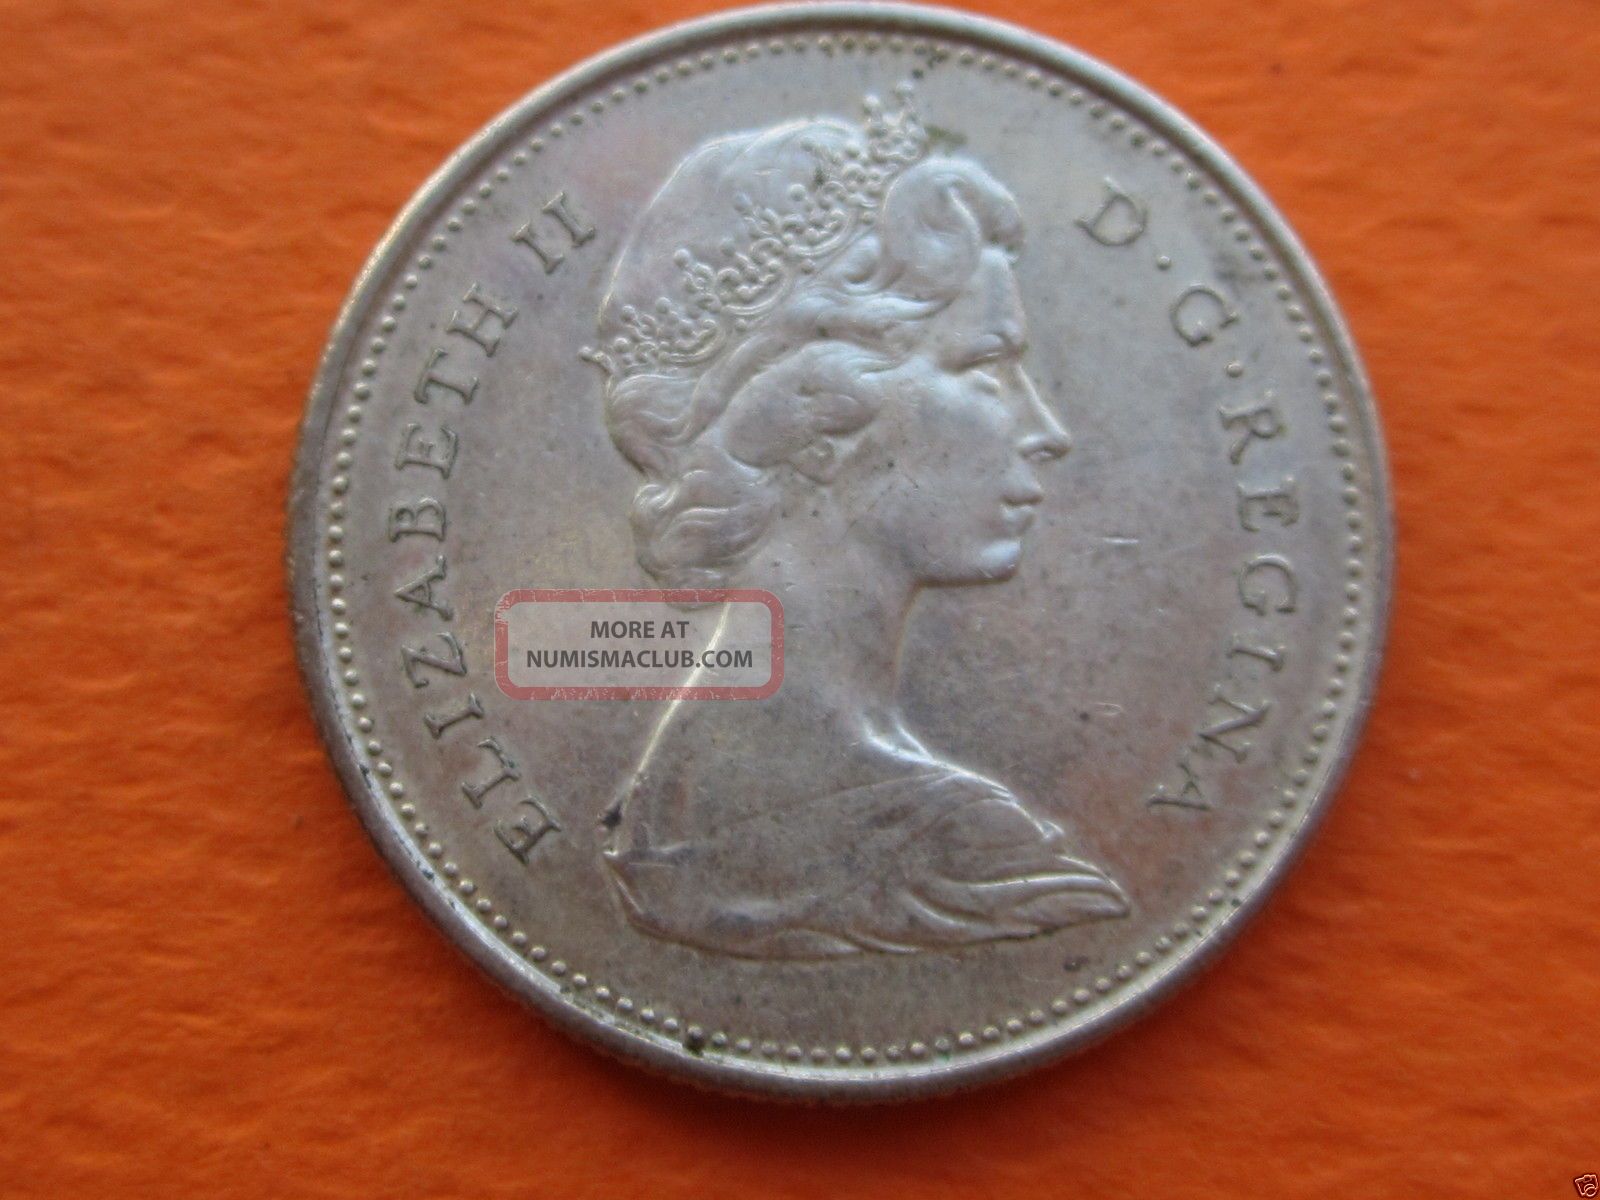 1867 - 1967 Centennial Canadian Quarter (25c Silver Coin). 1447